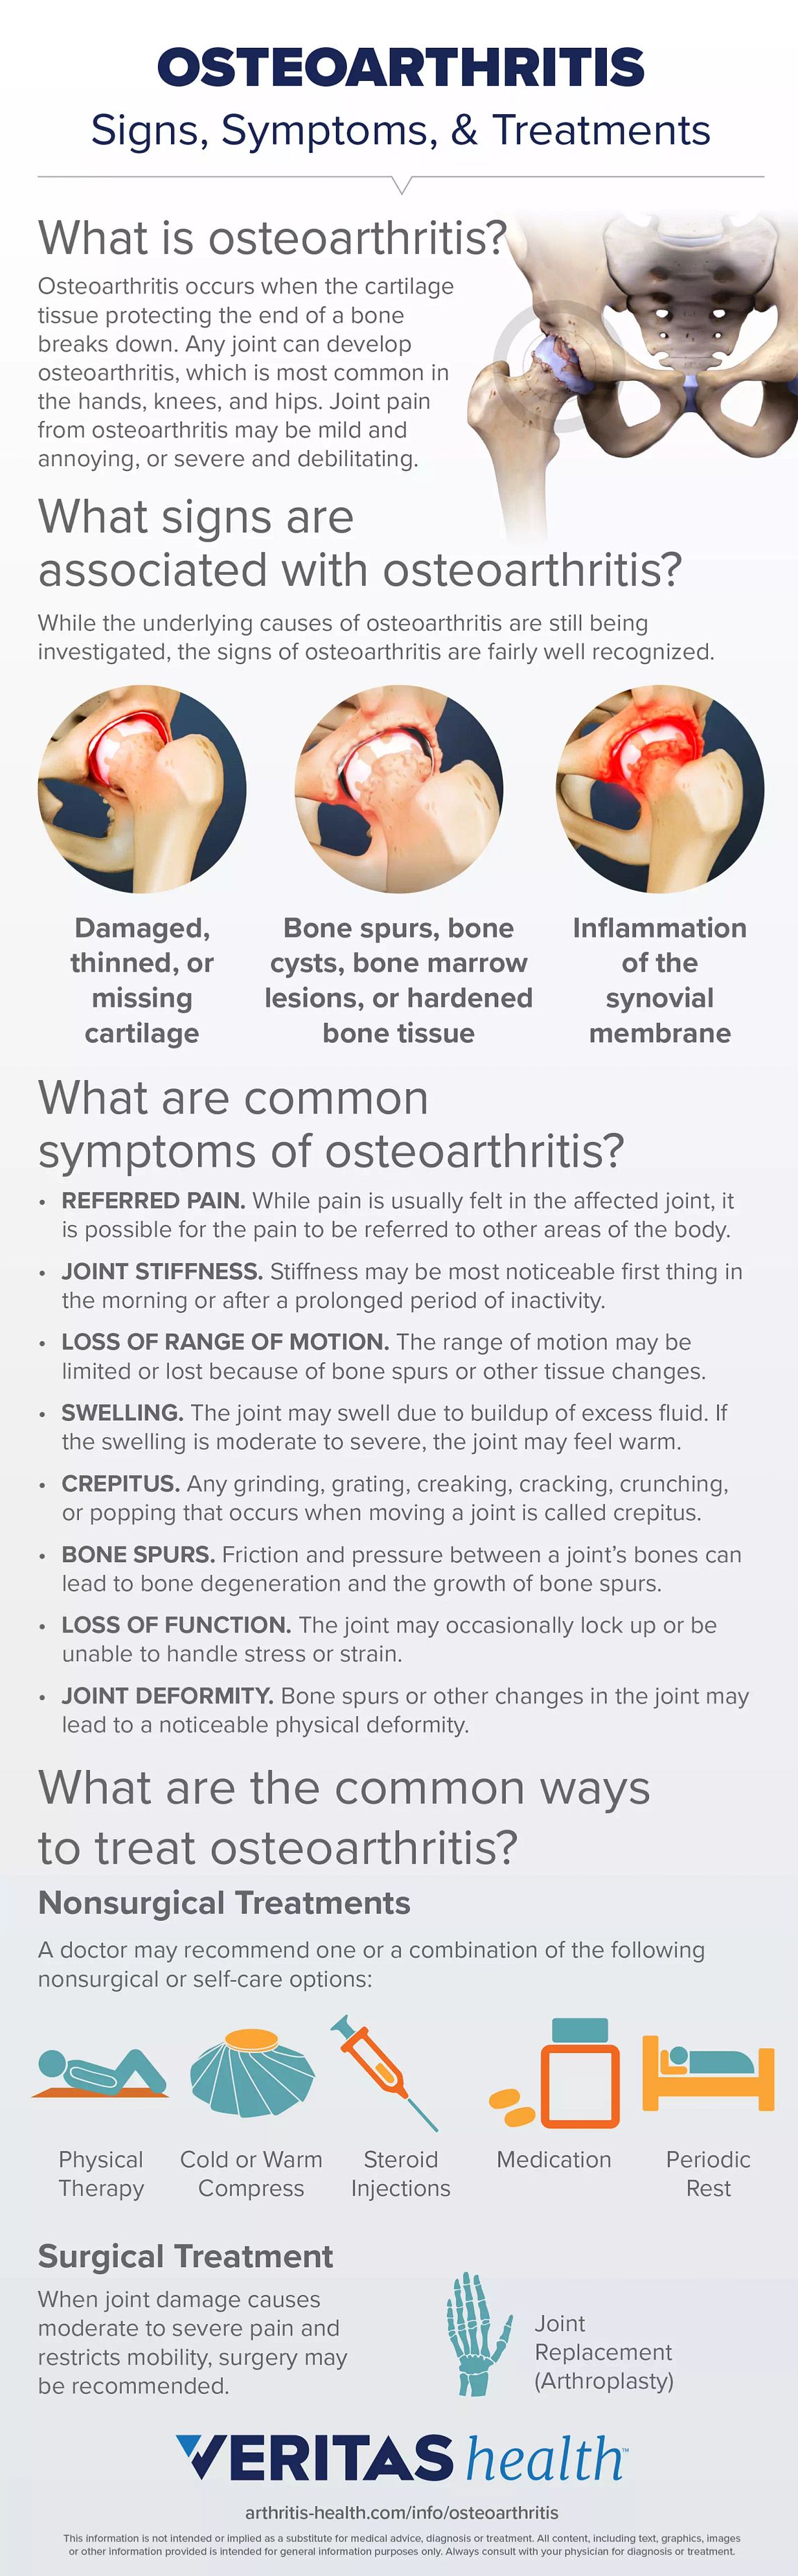 osteoarthritis treatment guidelines 2022